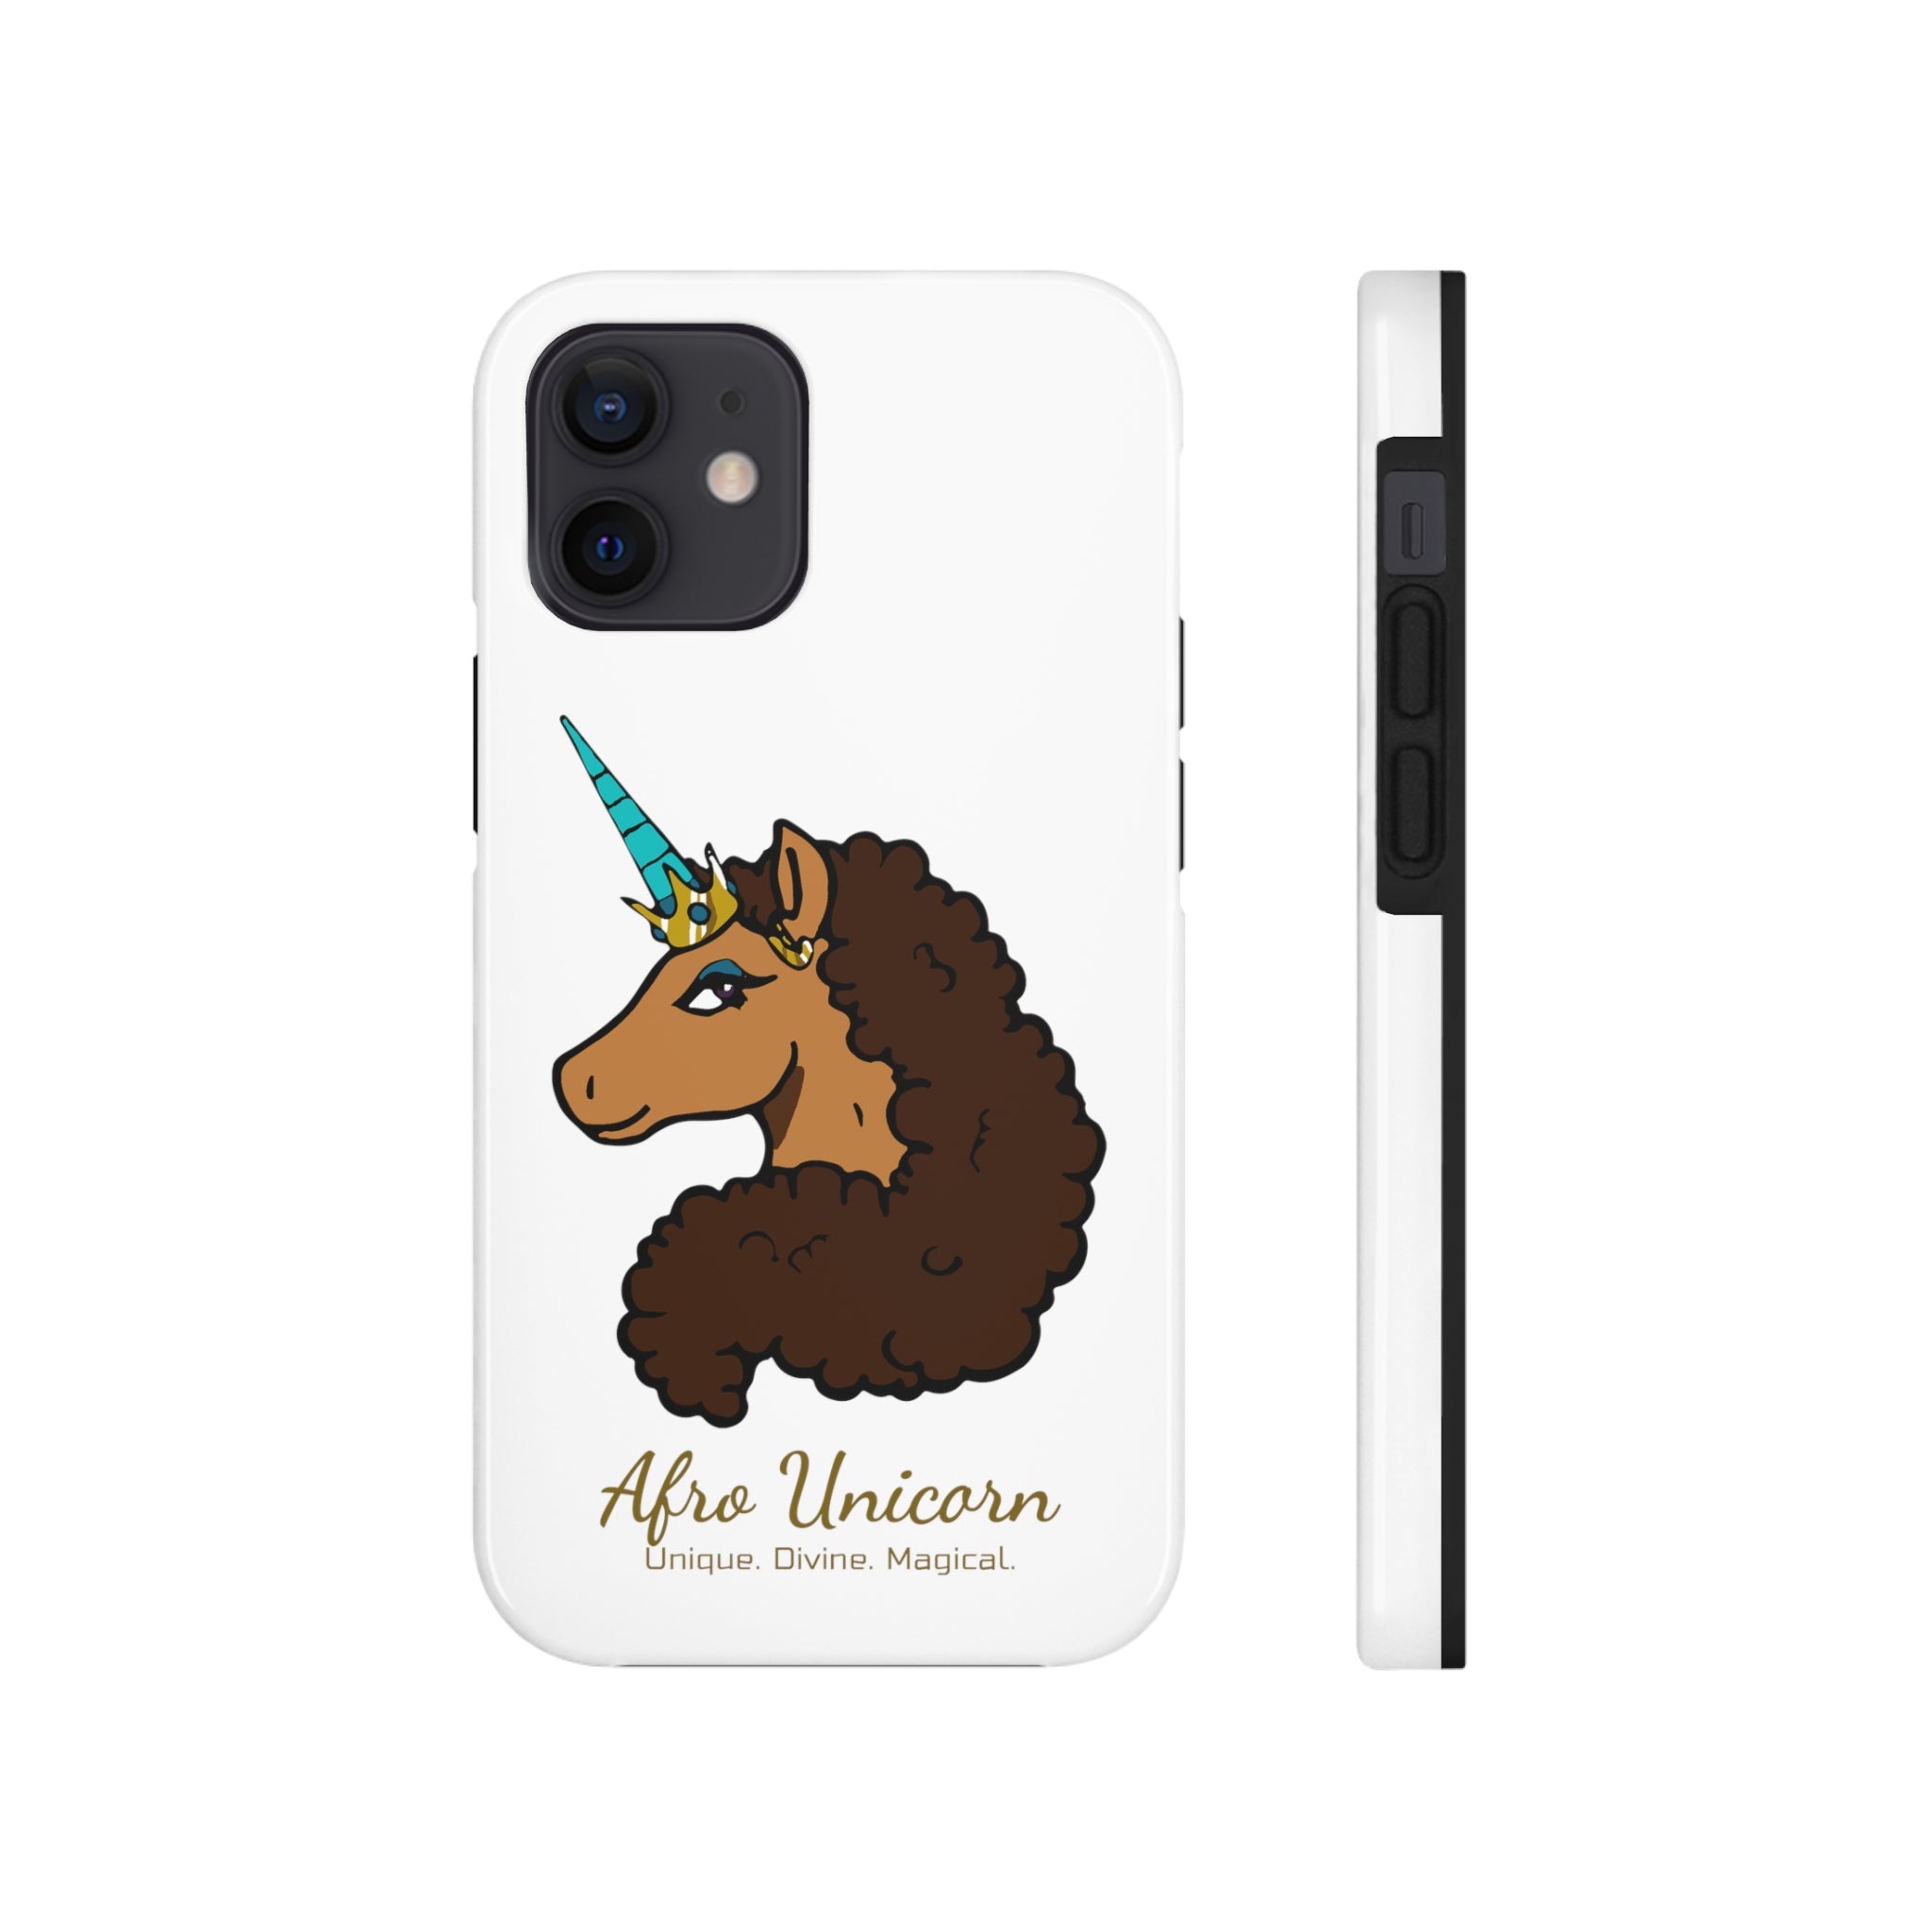 Afro Unicorn Tough Phone Cases - Vanilla